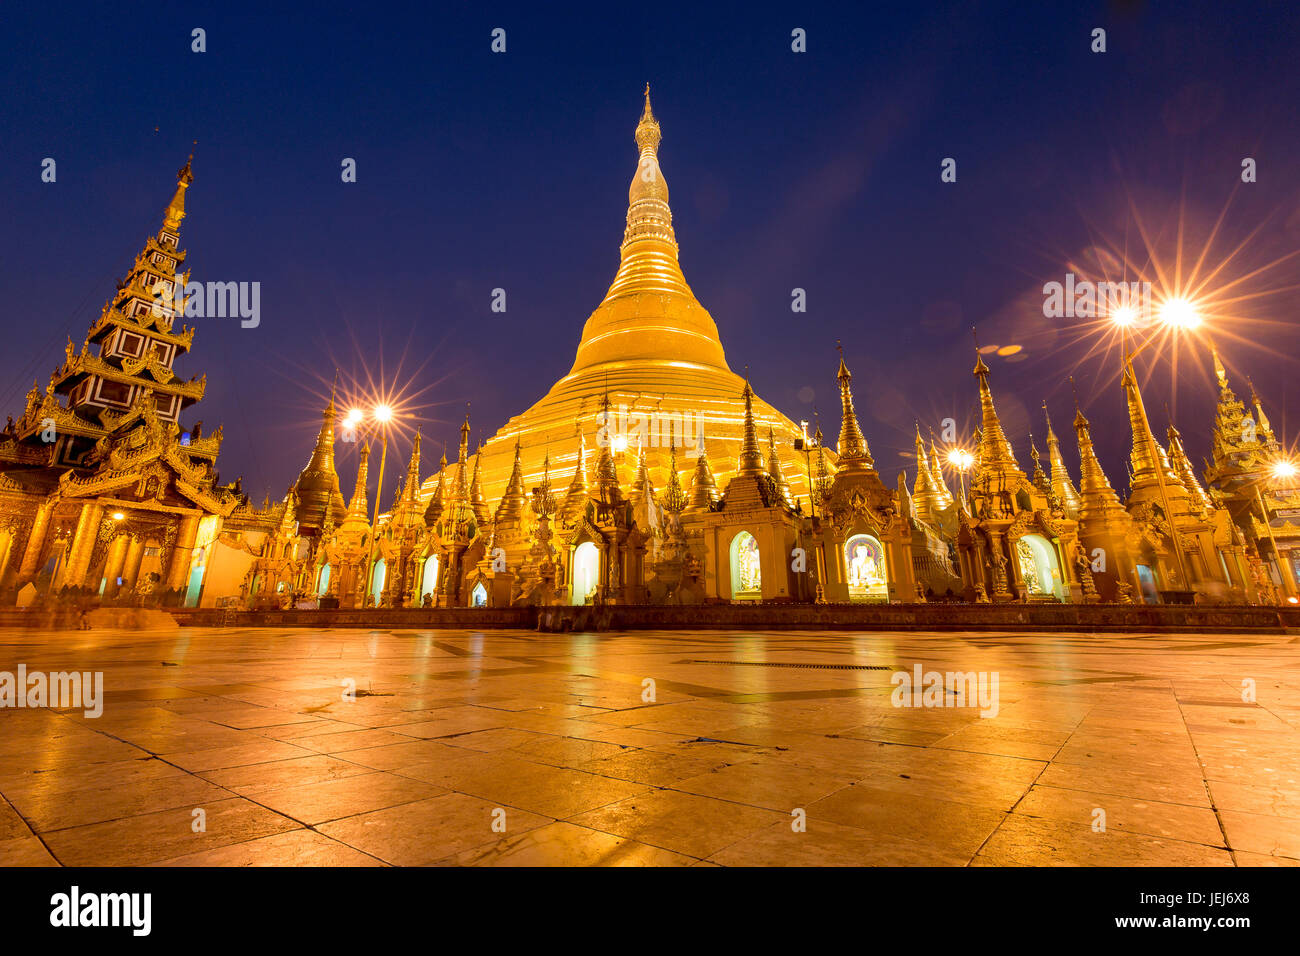 Die Shwedagon-Pagode - vergoldeten Shwedagon Zedi Daw - große Dagon Pagode - Goldene Pagode Stupa Yangon Myanmar Stockfoto